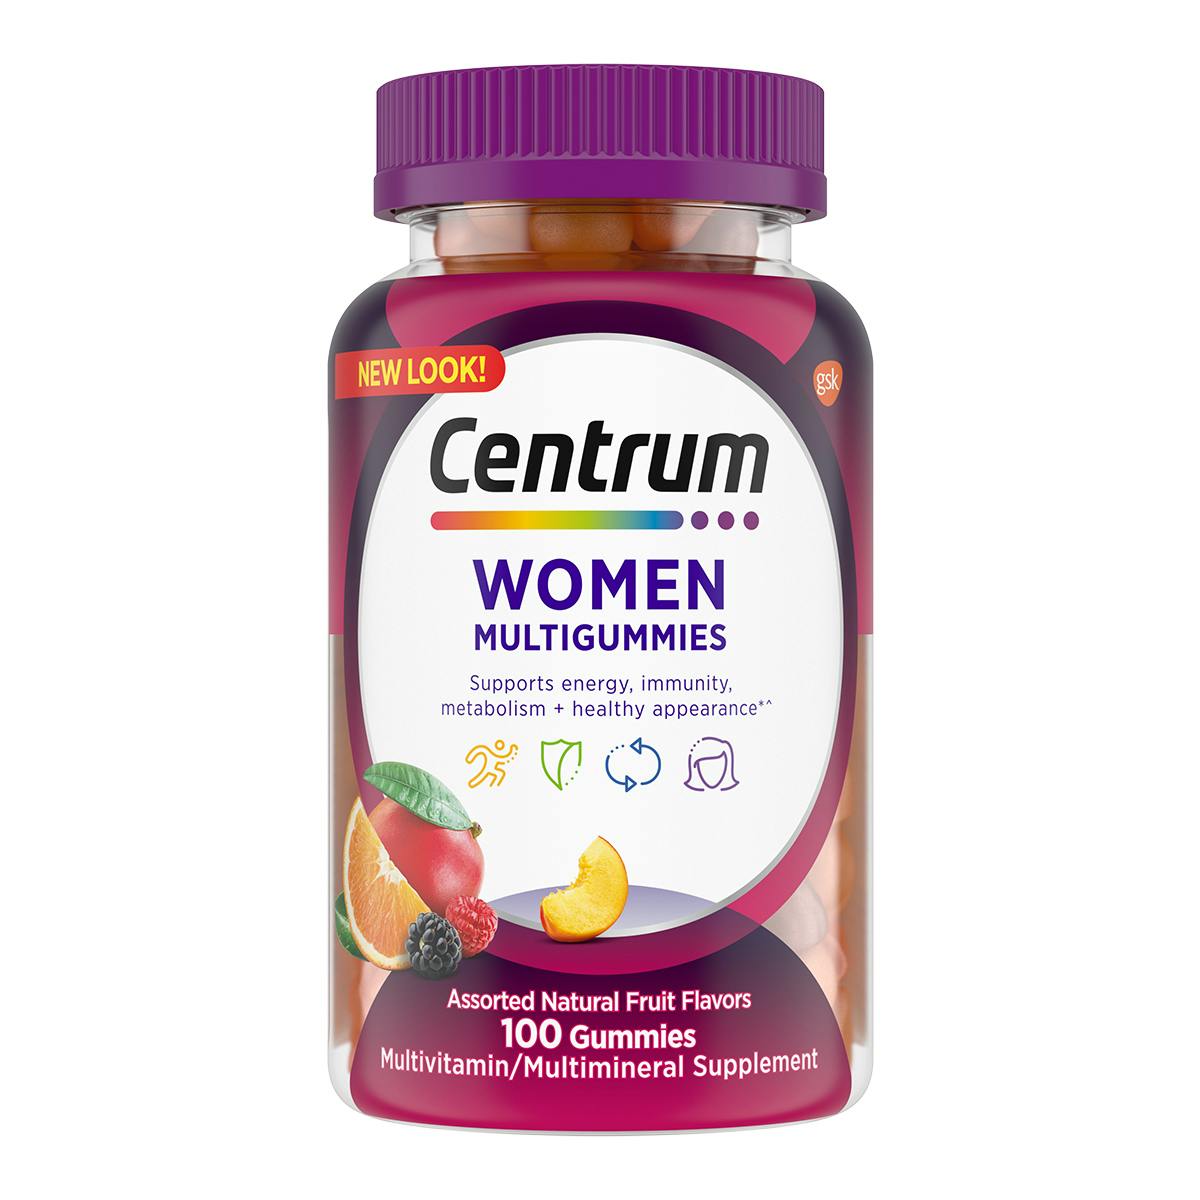 Bottle of Centrum MultiGummies Women